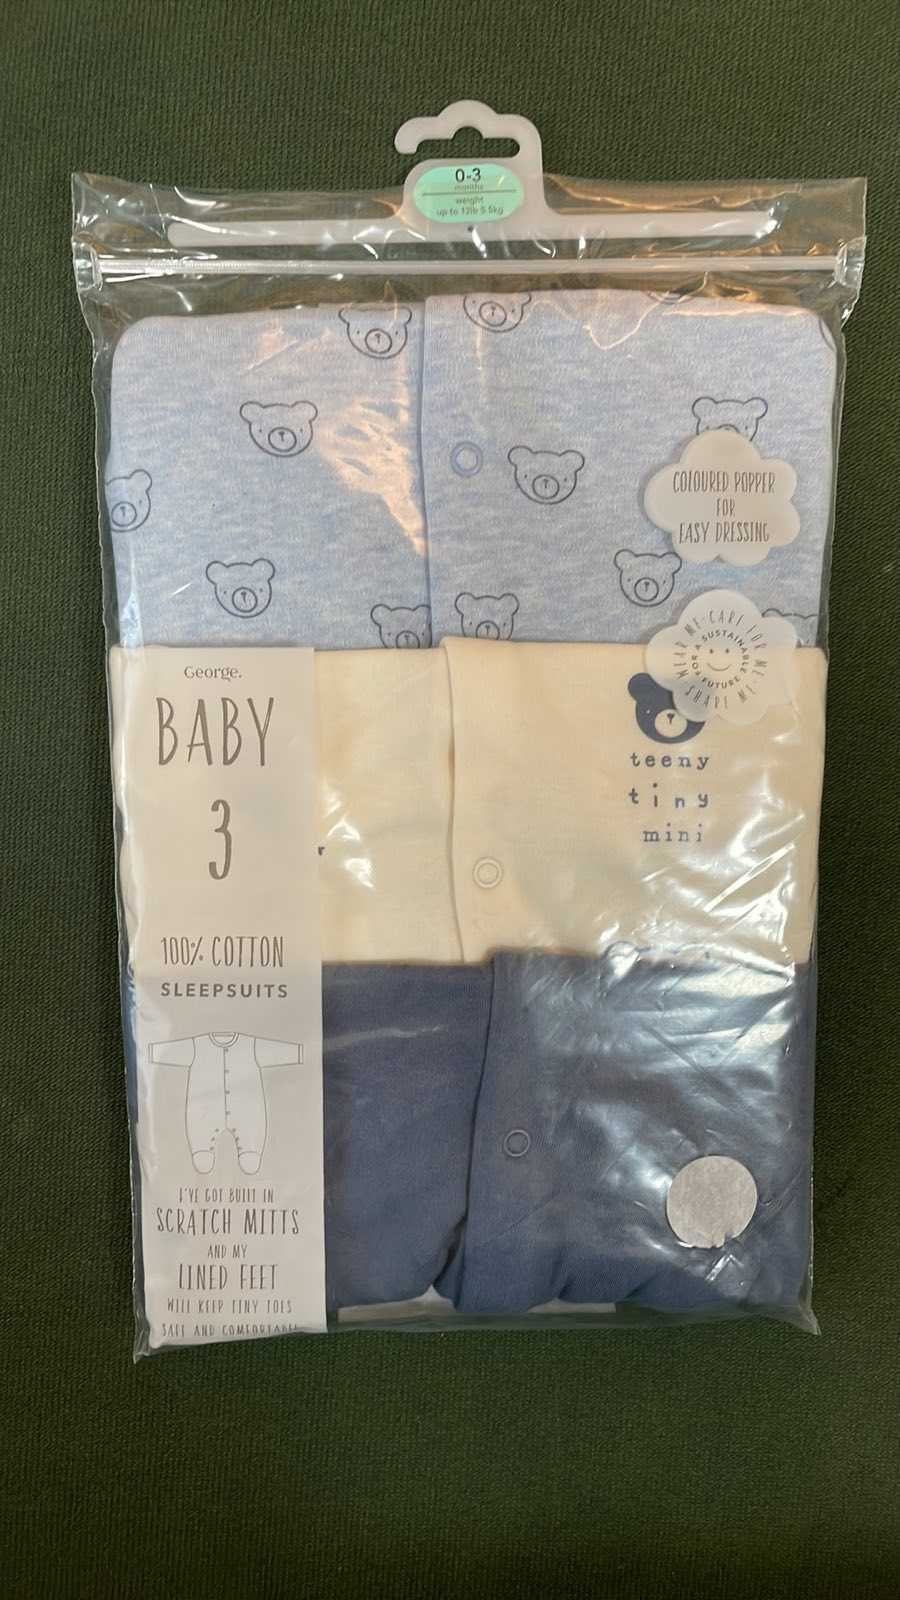 Ромпер за момче бебе 100% памук, детска пижама, 3 броя, 3 размера